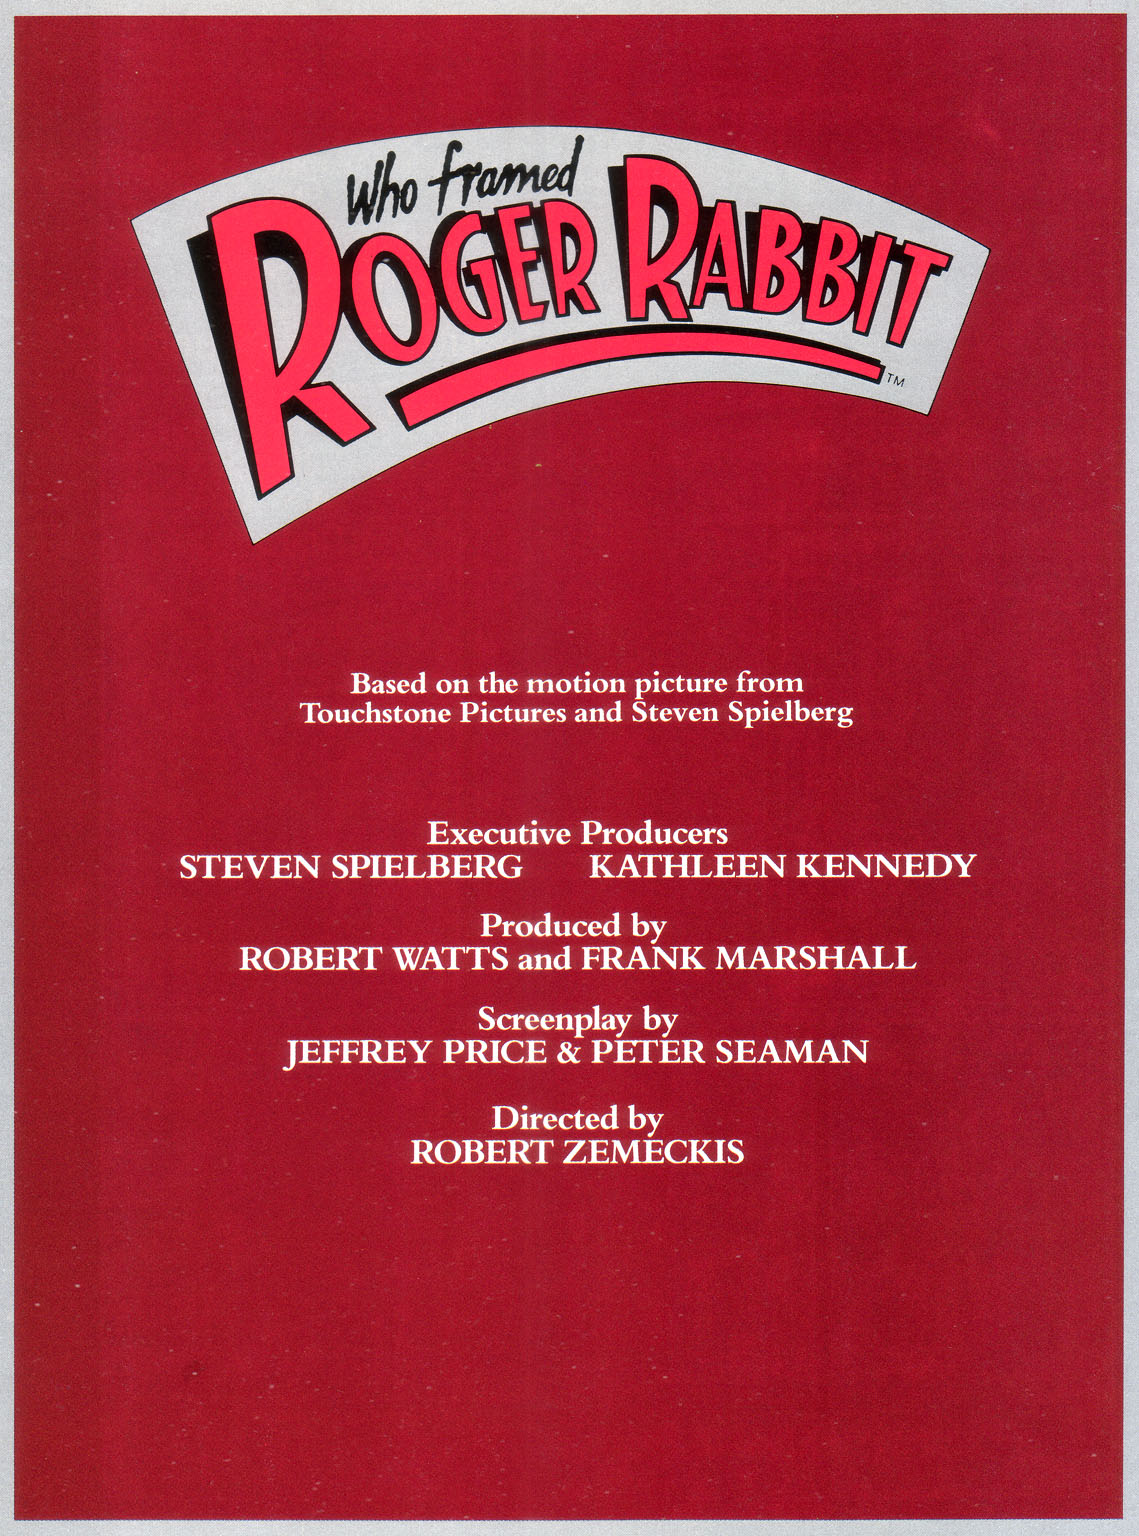 Marvel Graphic Novel issue 41 - Who Framed Roger Rabbit - Page 3